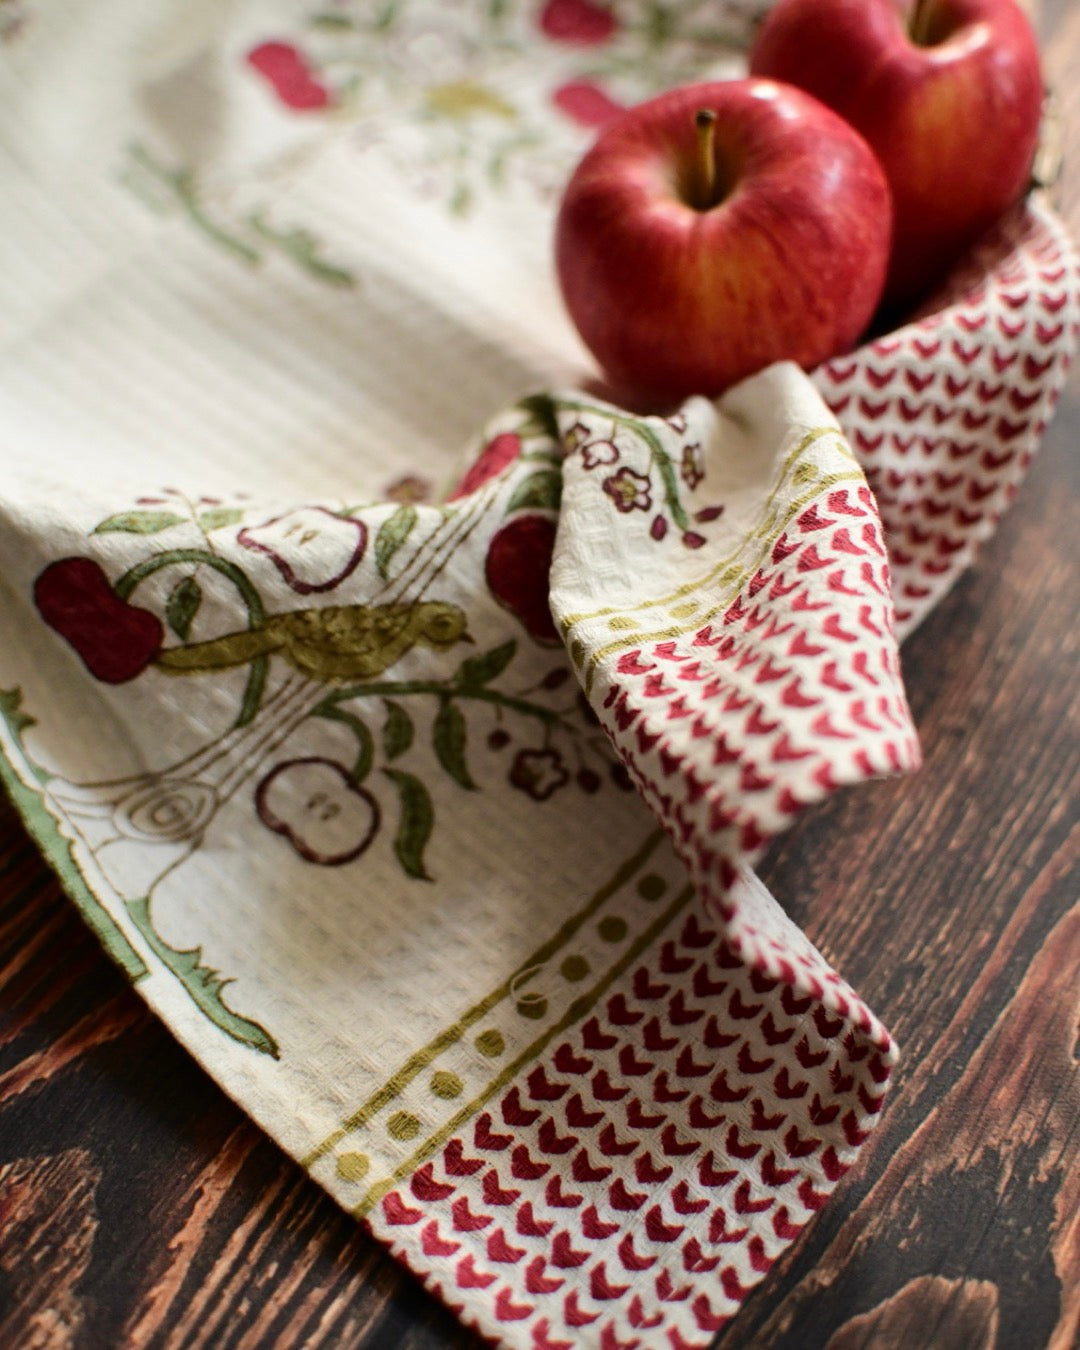 apple themed tea towel close-up view